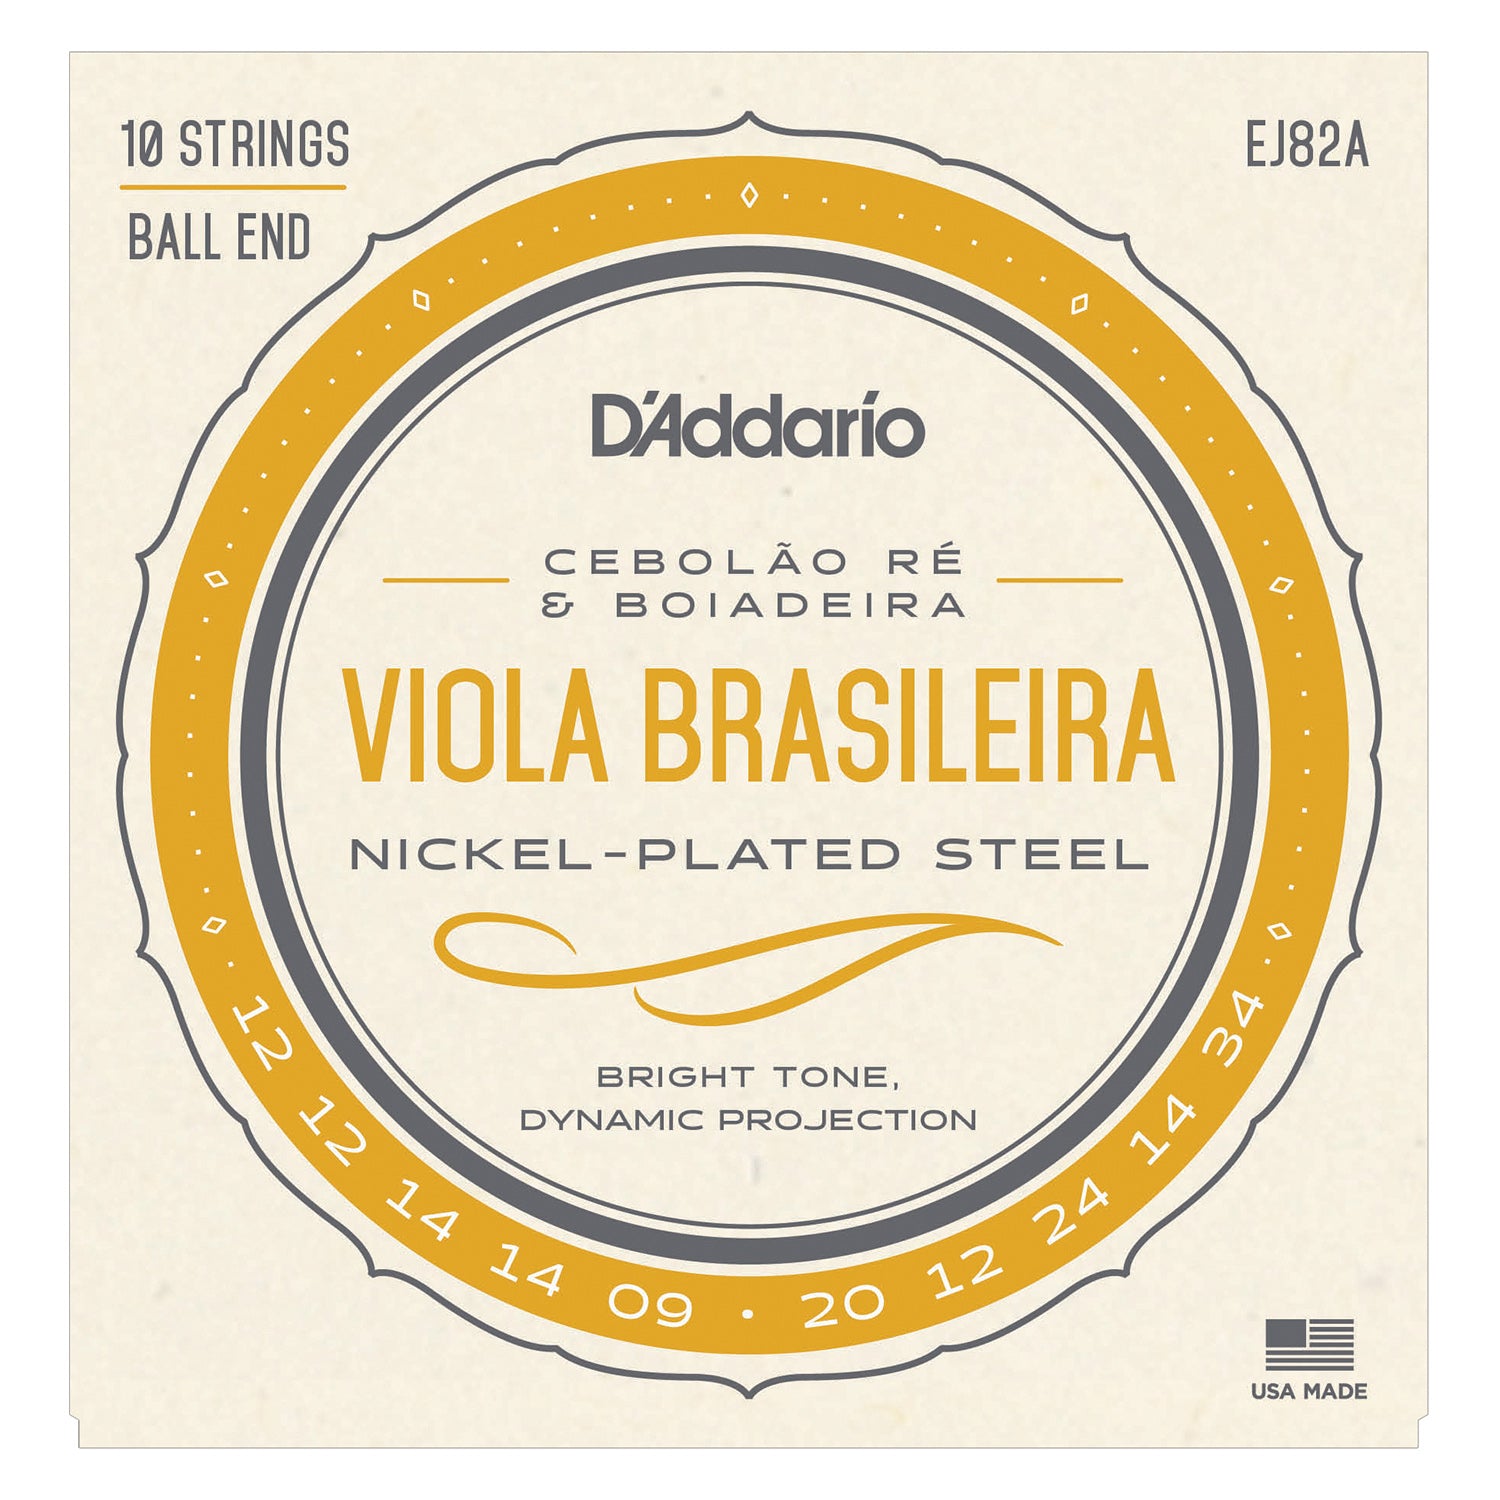 D'Addario EJ82A Viola Brasileira Set, Cebolao Re and Boiadeira